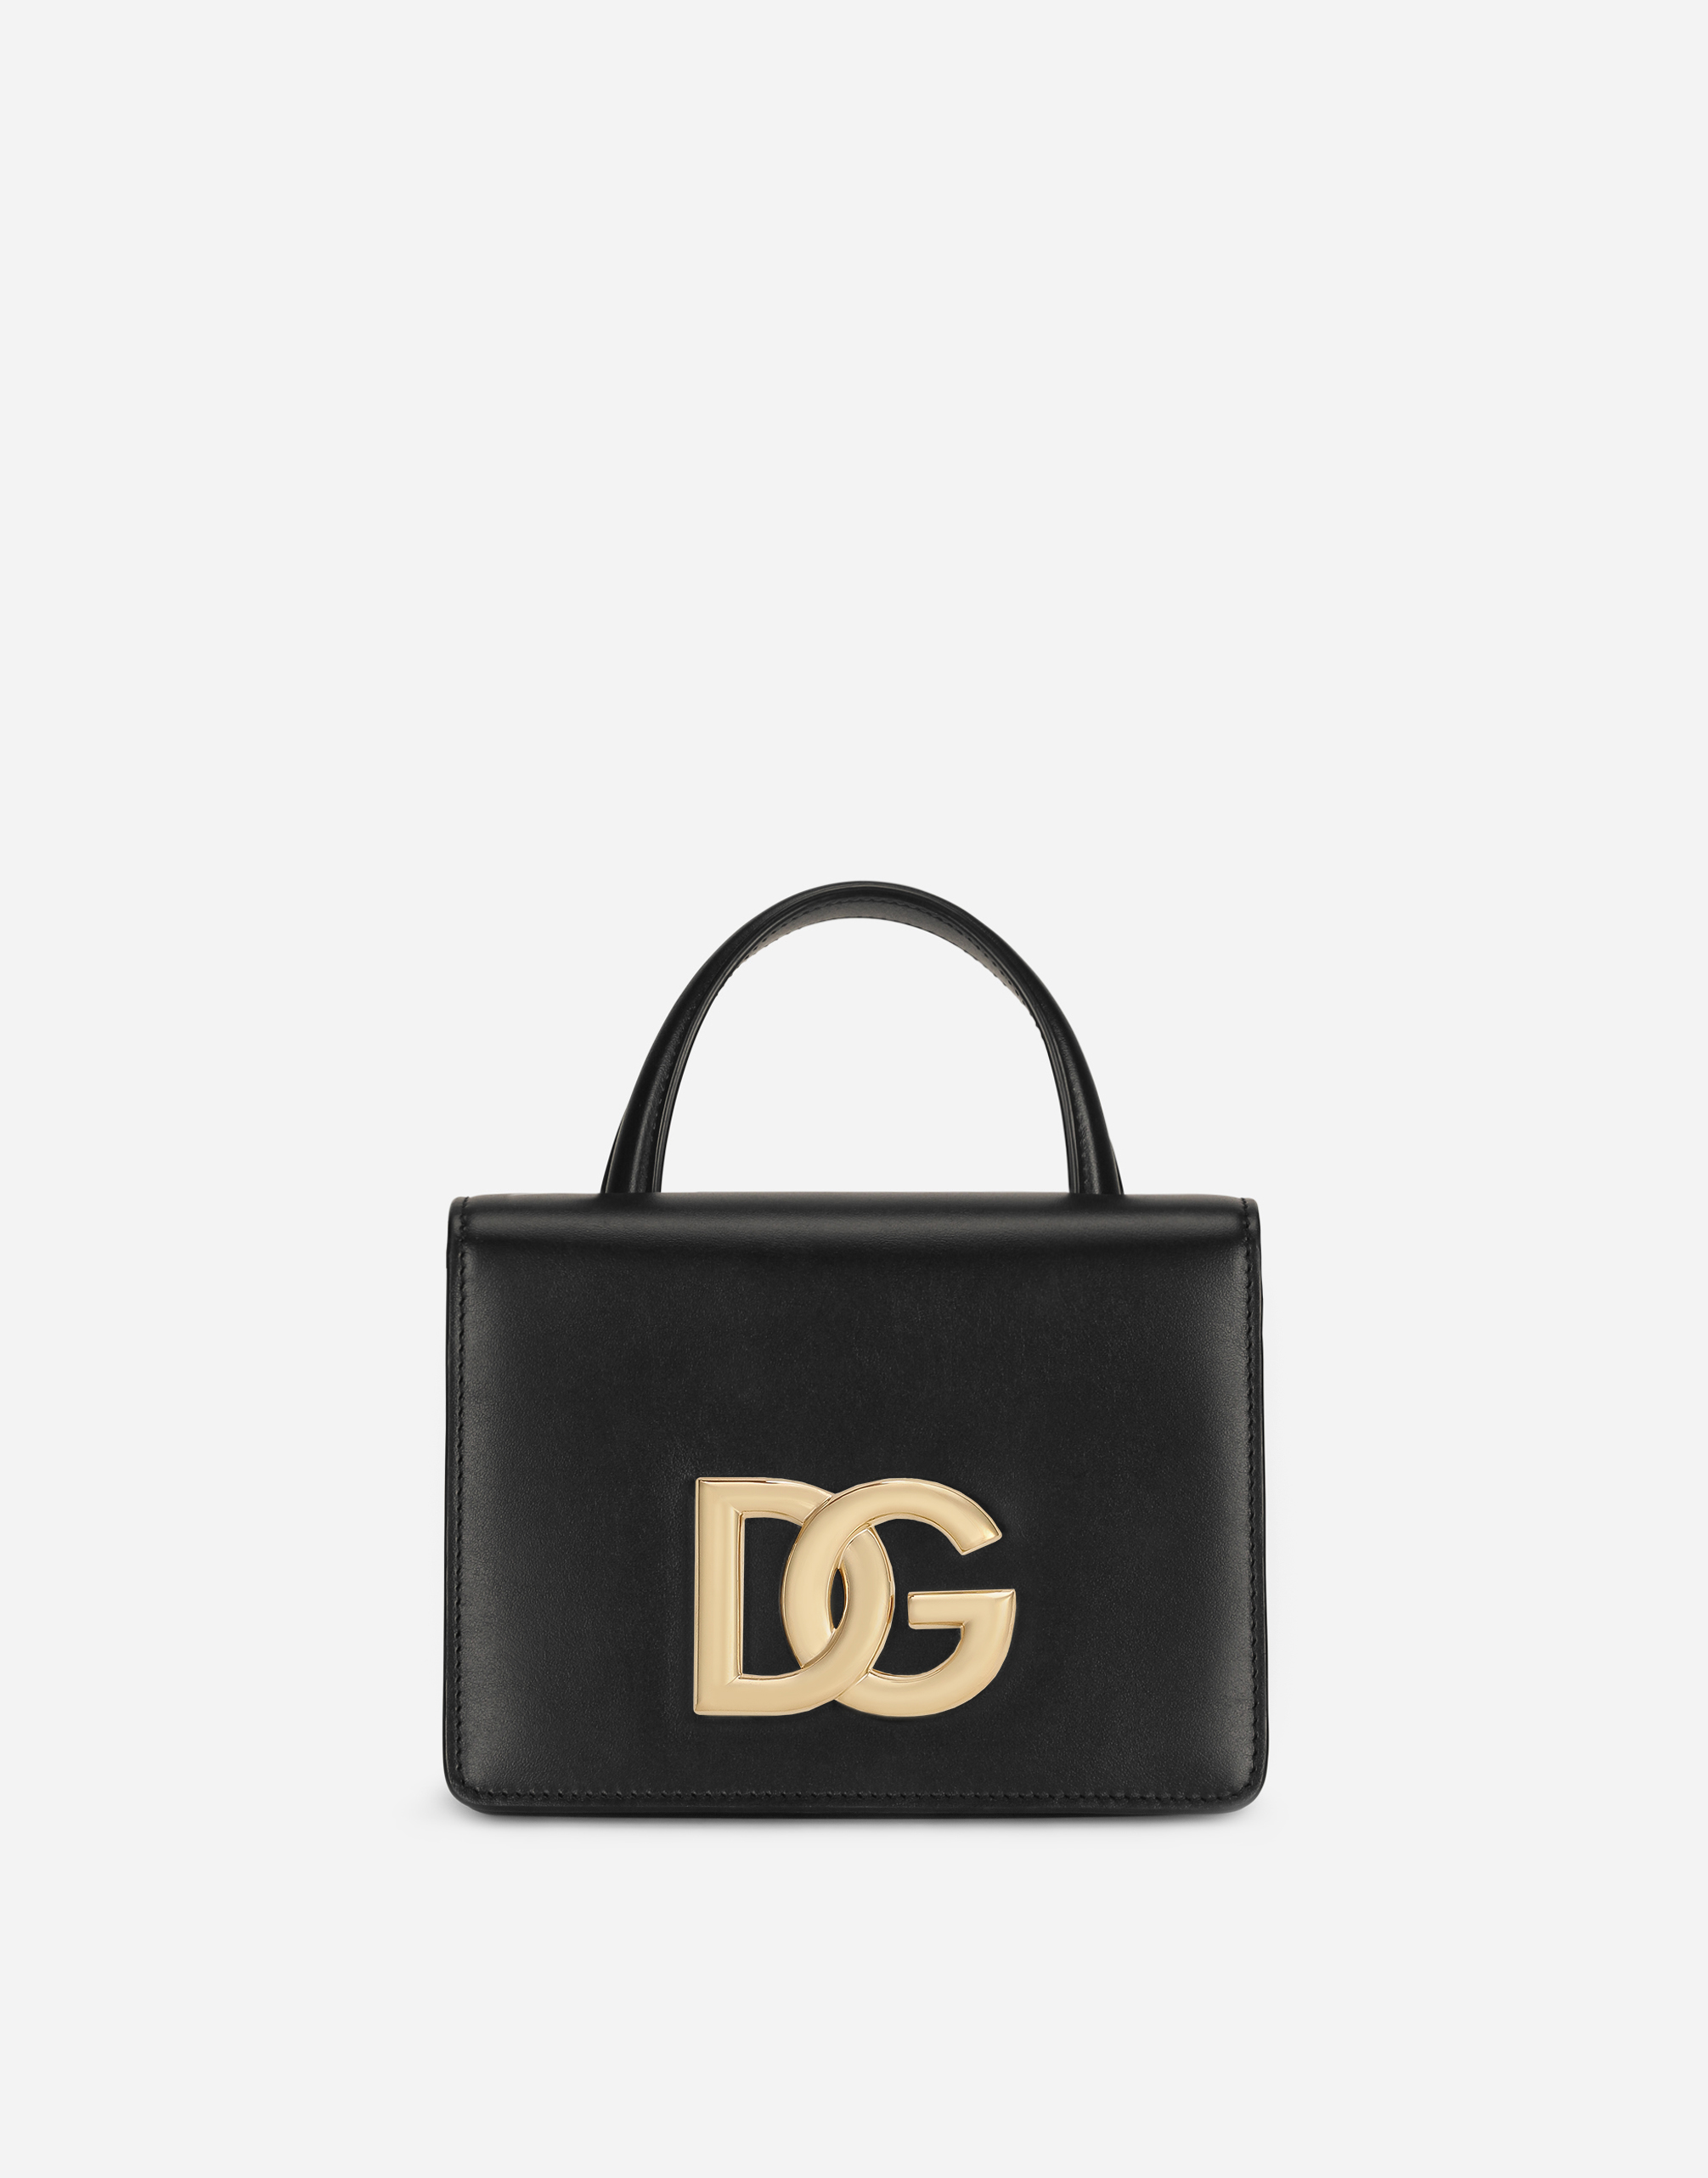 Calfskin 3.5 top-handle bag in Black